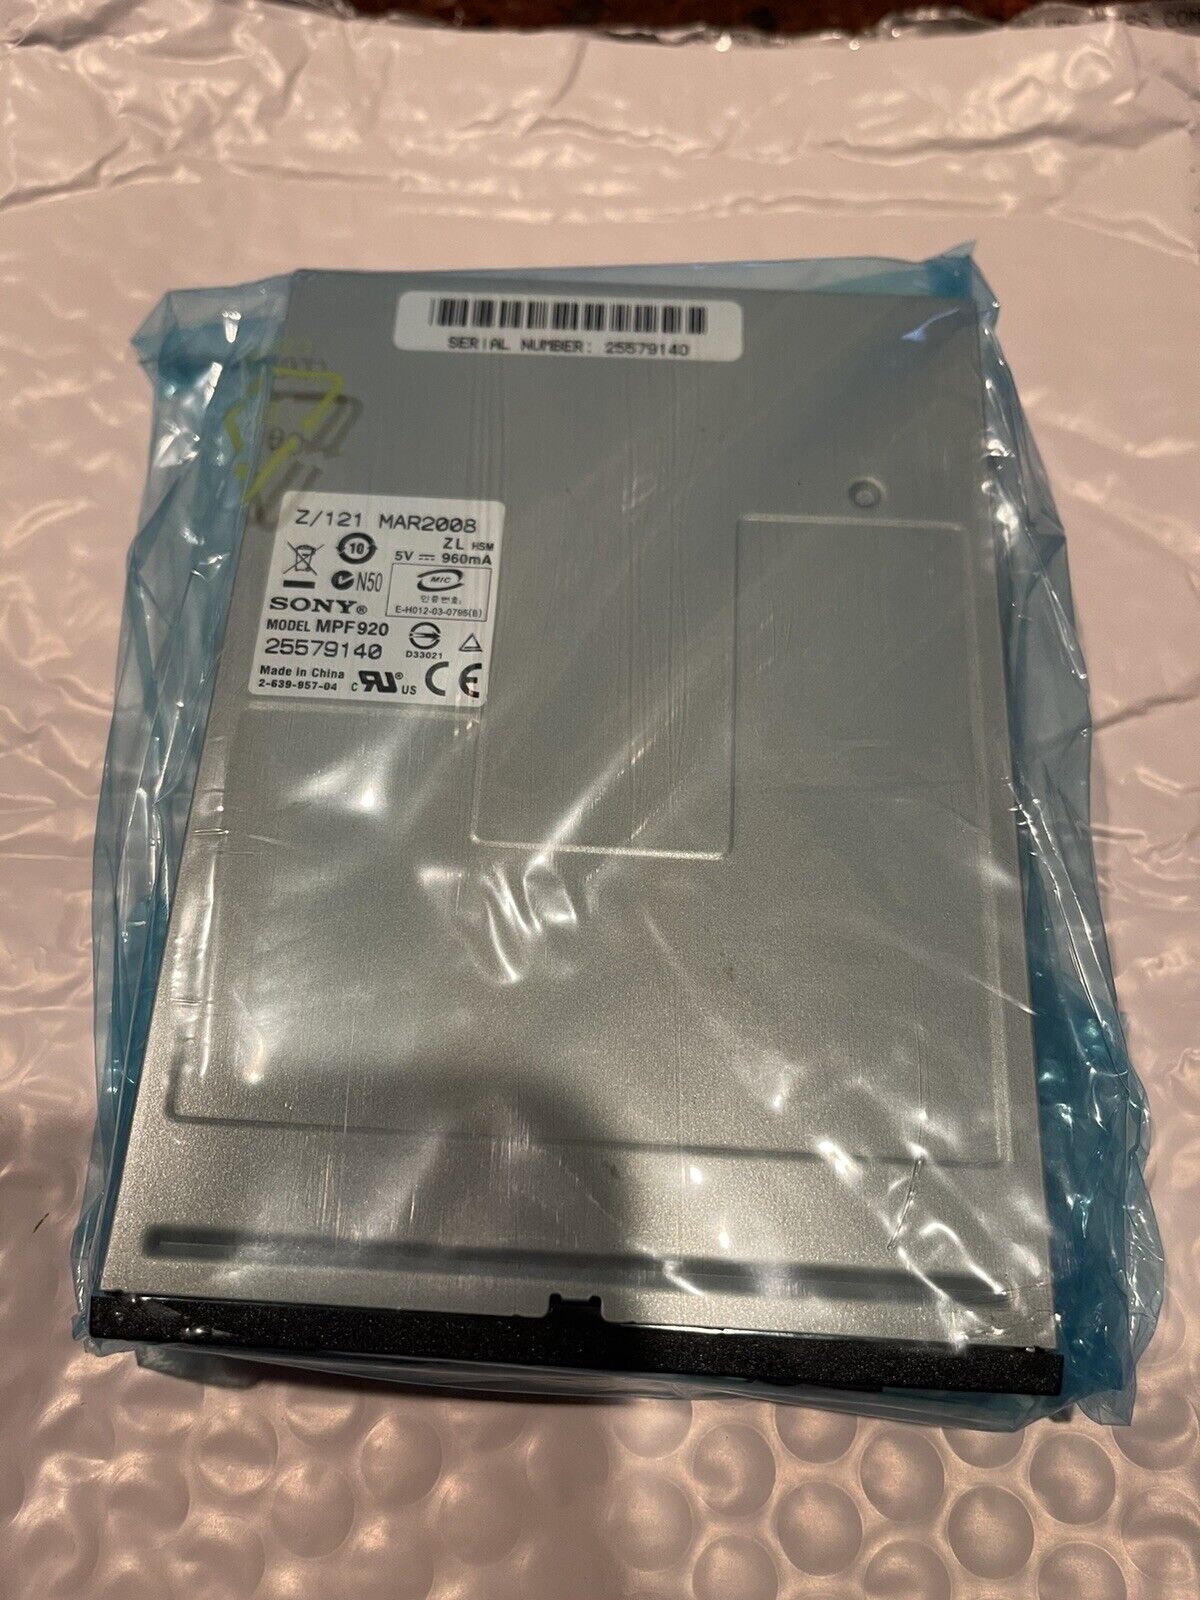 NEW Sony MPF920 Black 3.5” 1.44MB Legacy Floppy Drive